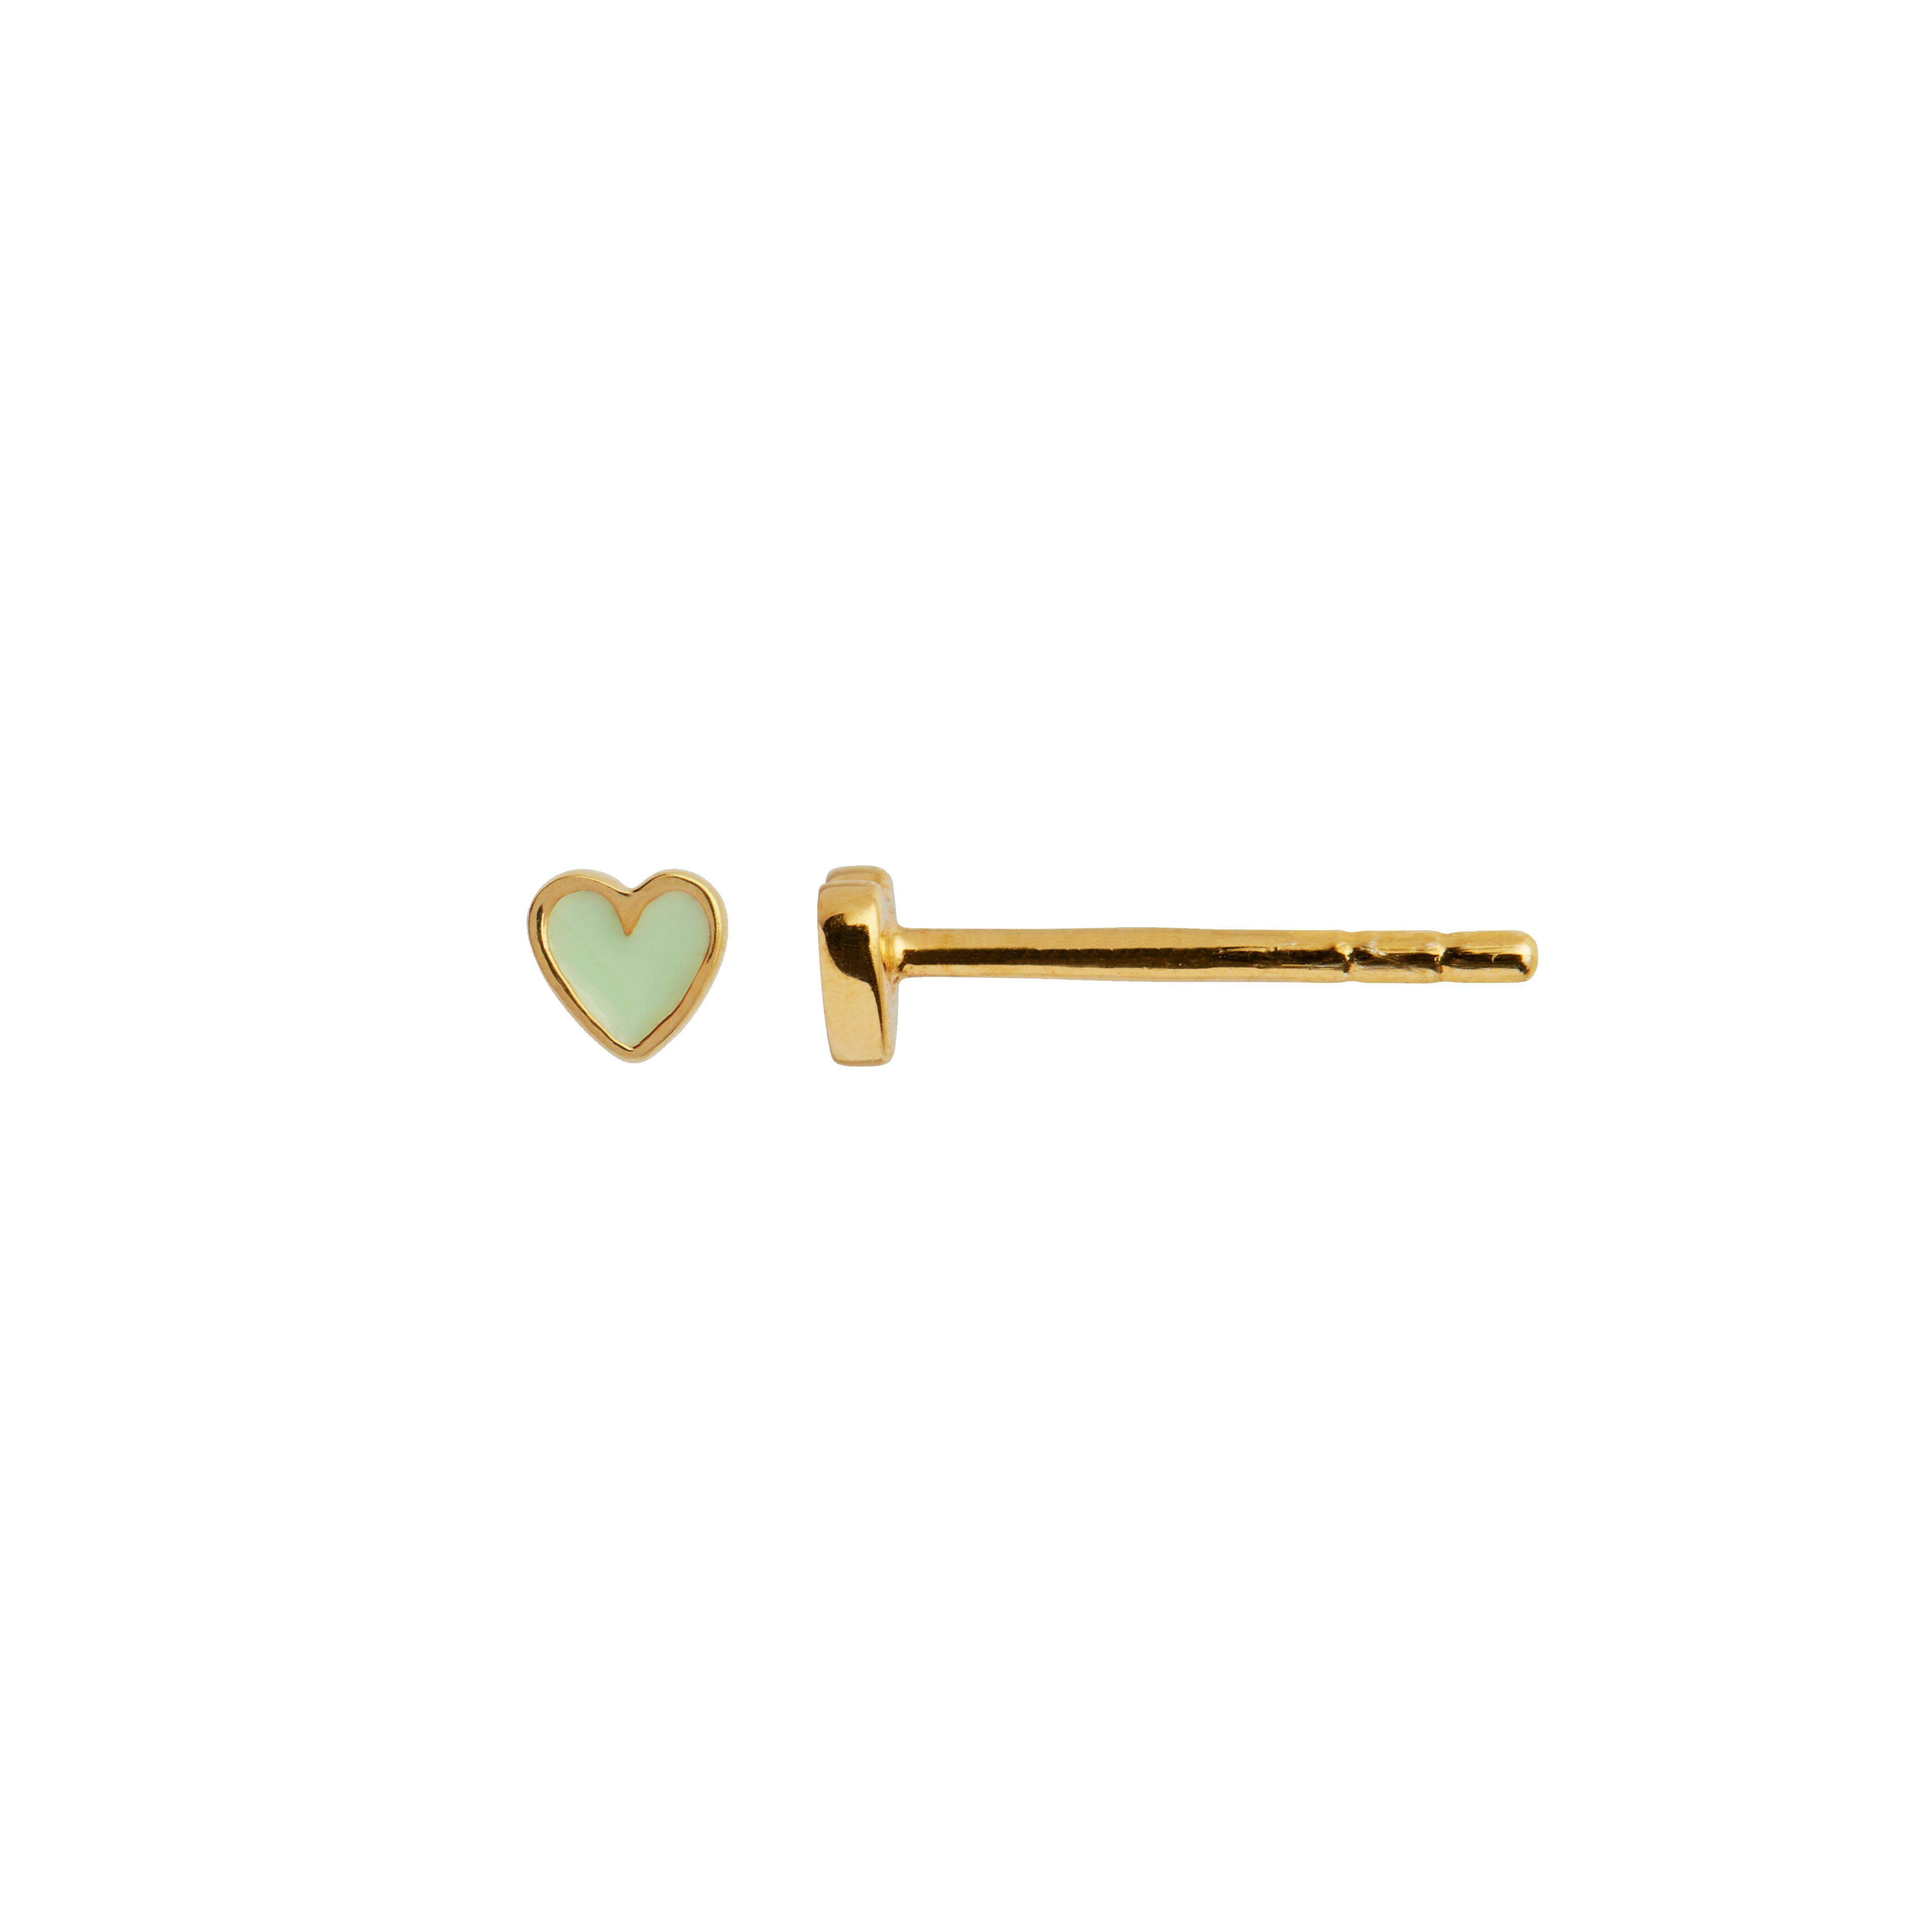 Petit Love Heart Earstick Mint Green von STINE A Jewelry in Vergoldet-Silber Sterling 925